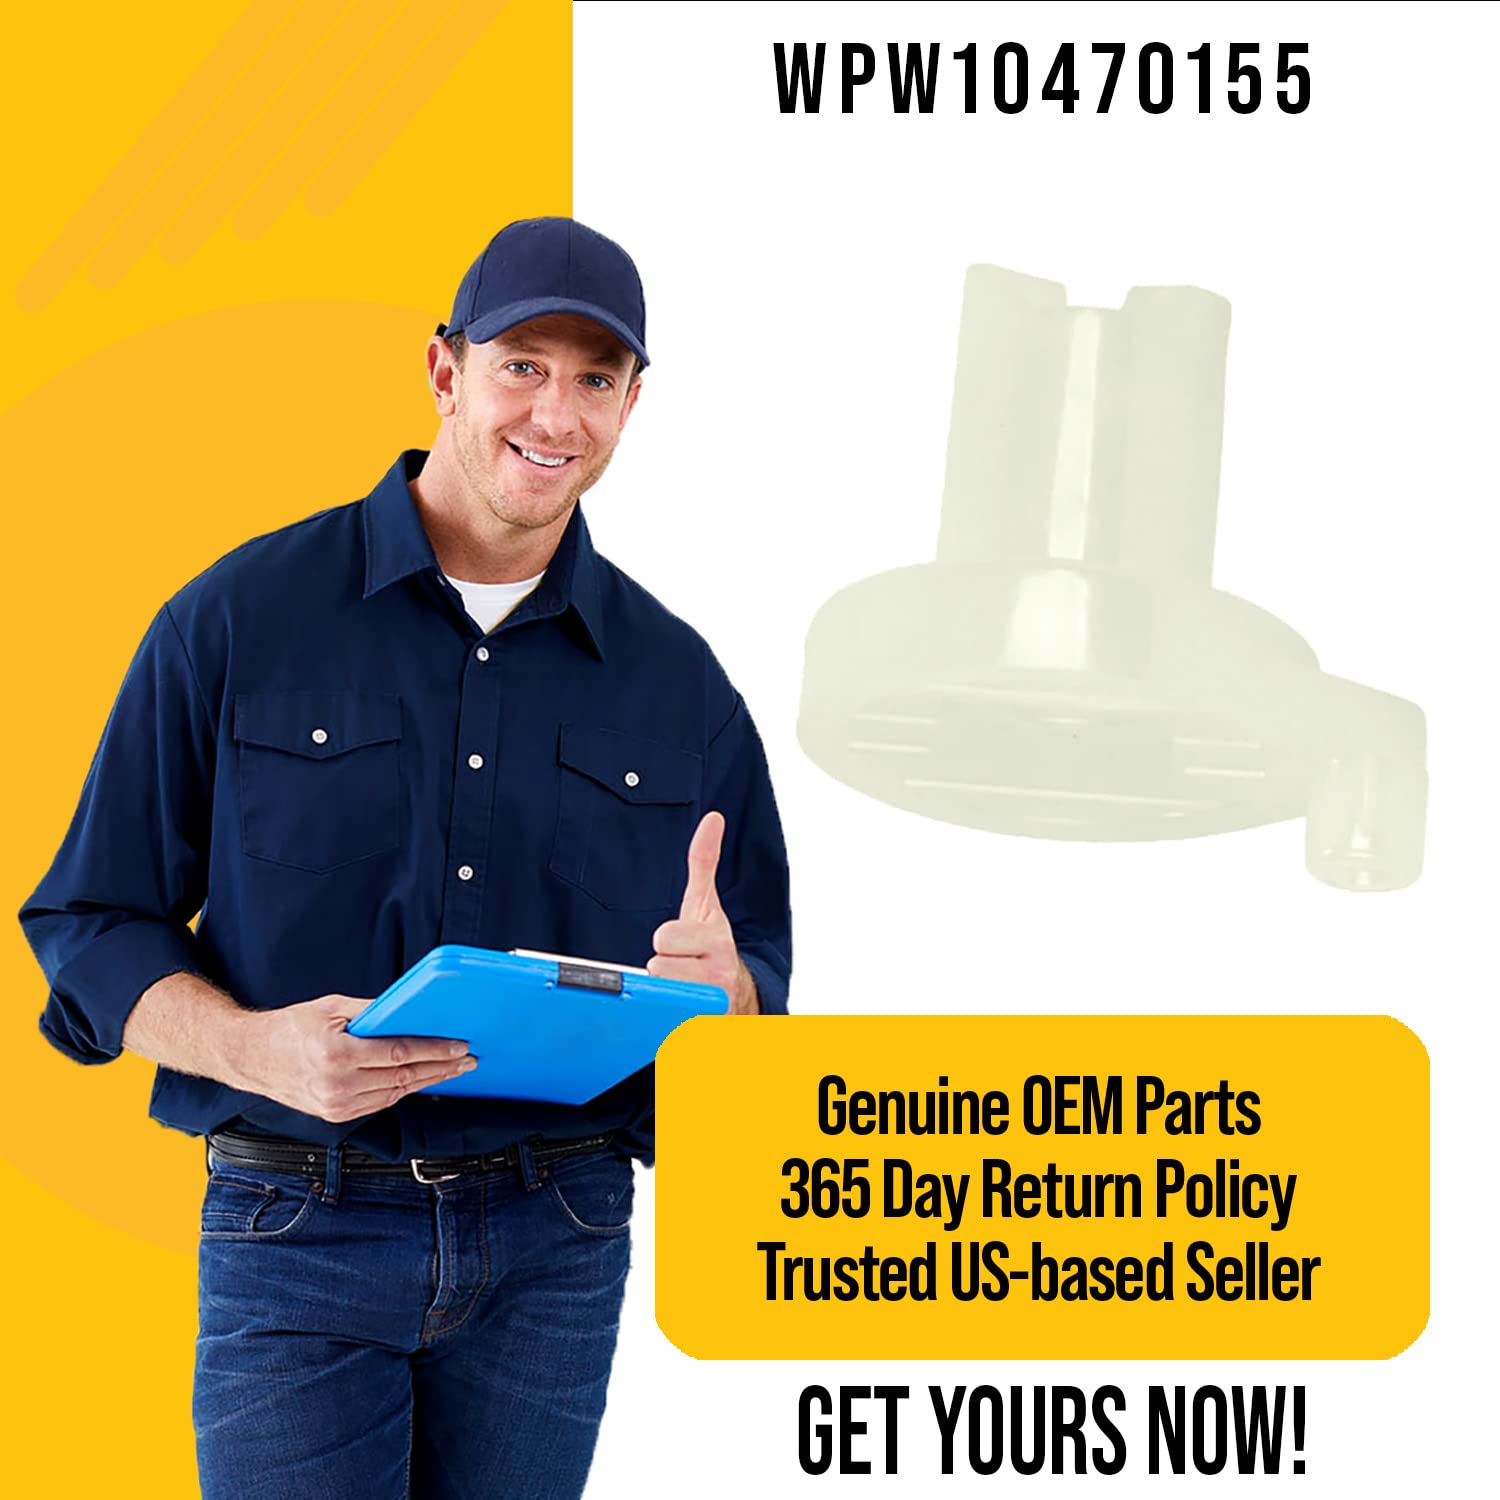 WPW10470155 W10470155 Refrigerator Door Cam - Compatible Whirlpool Kenmore Maytag - Replaces AP6021957 2684165 PS11755285 W10397037 - Helps to Open Door Smoothly